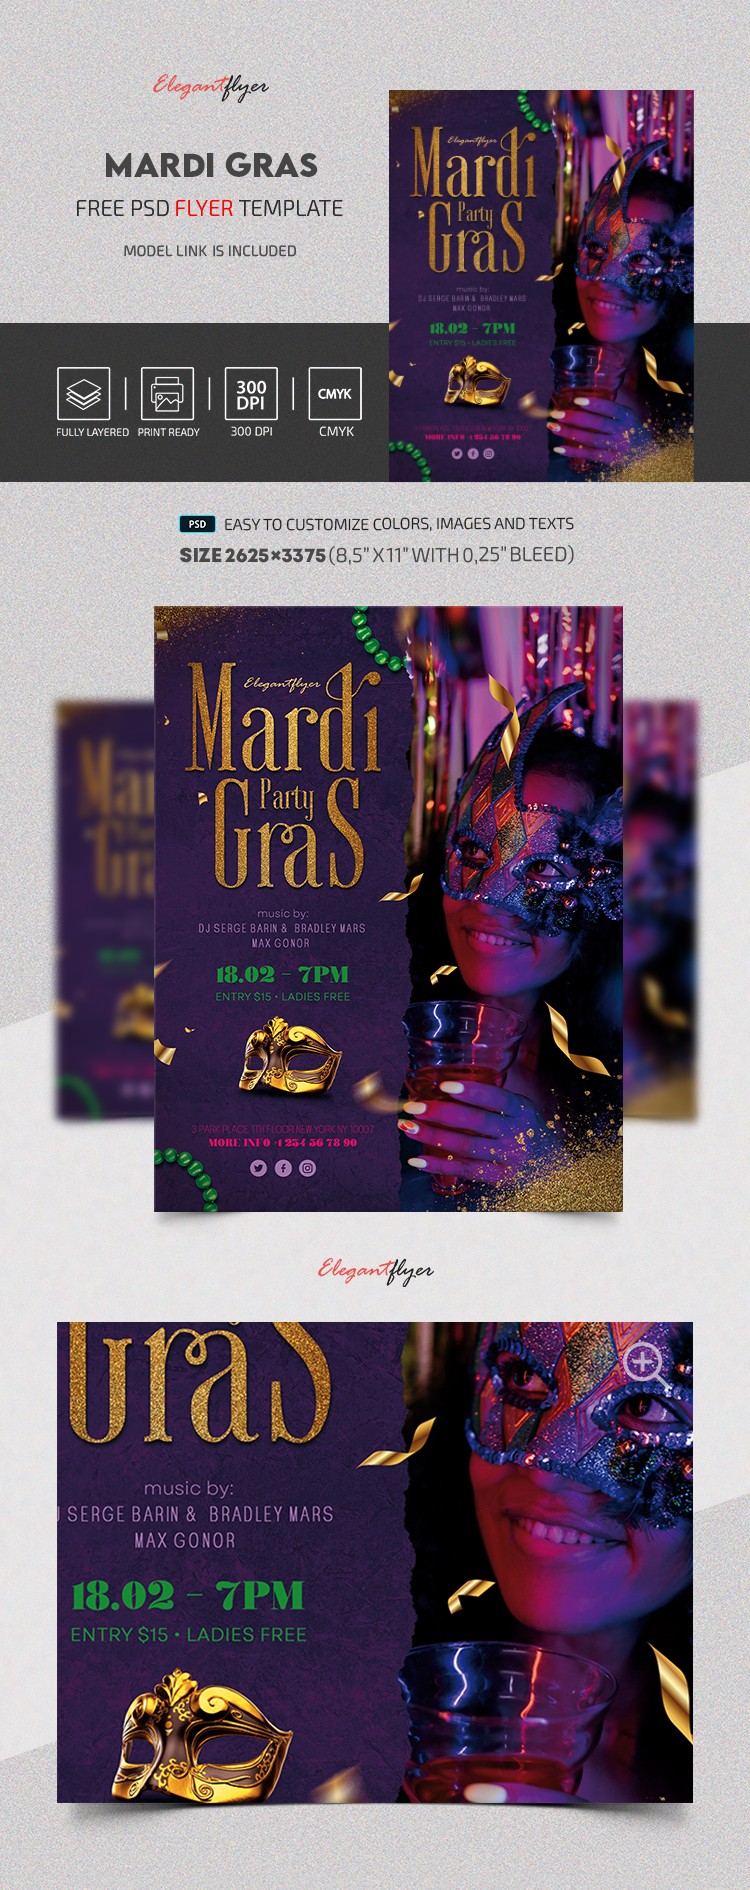 Mardi Gras Flyer by ElegantFlyer